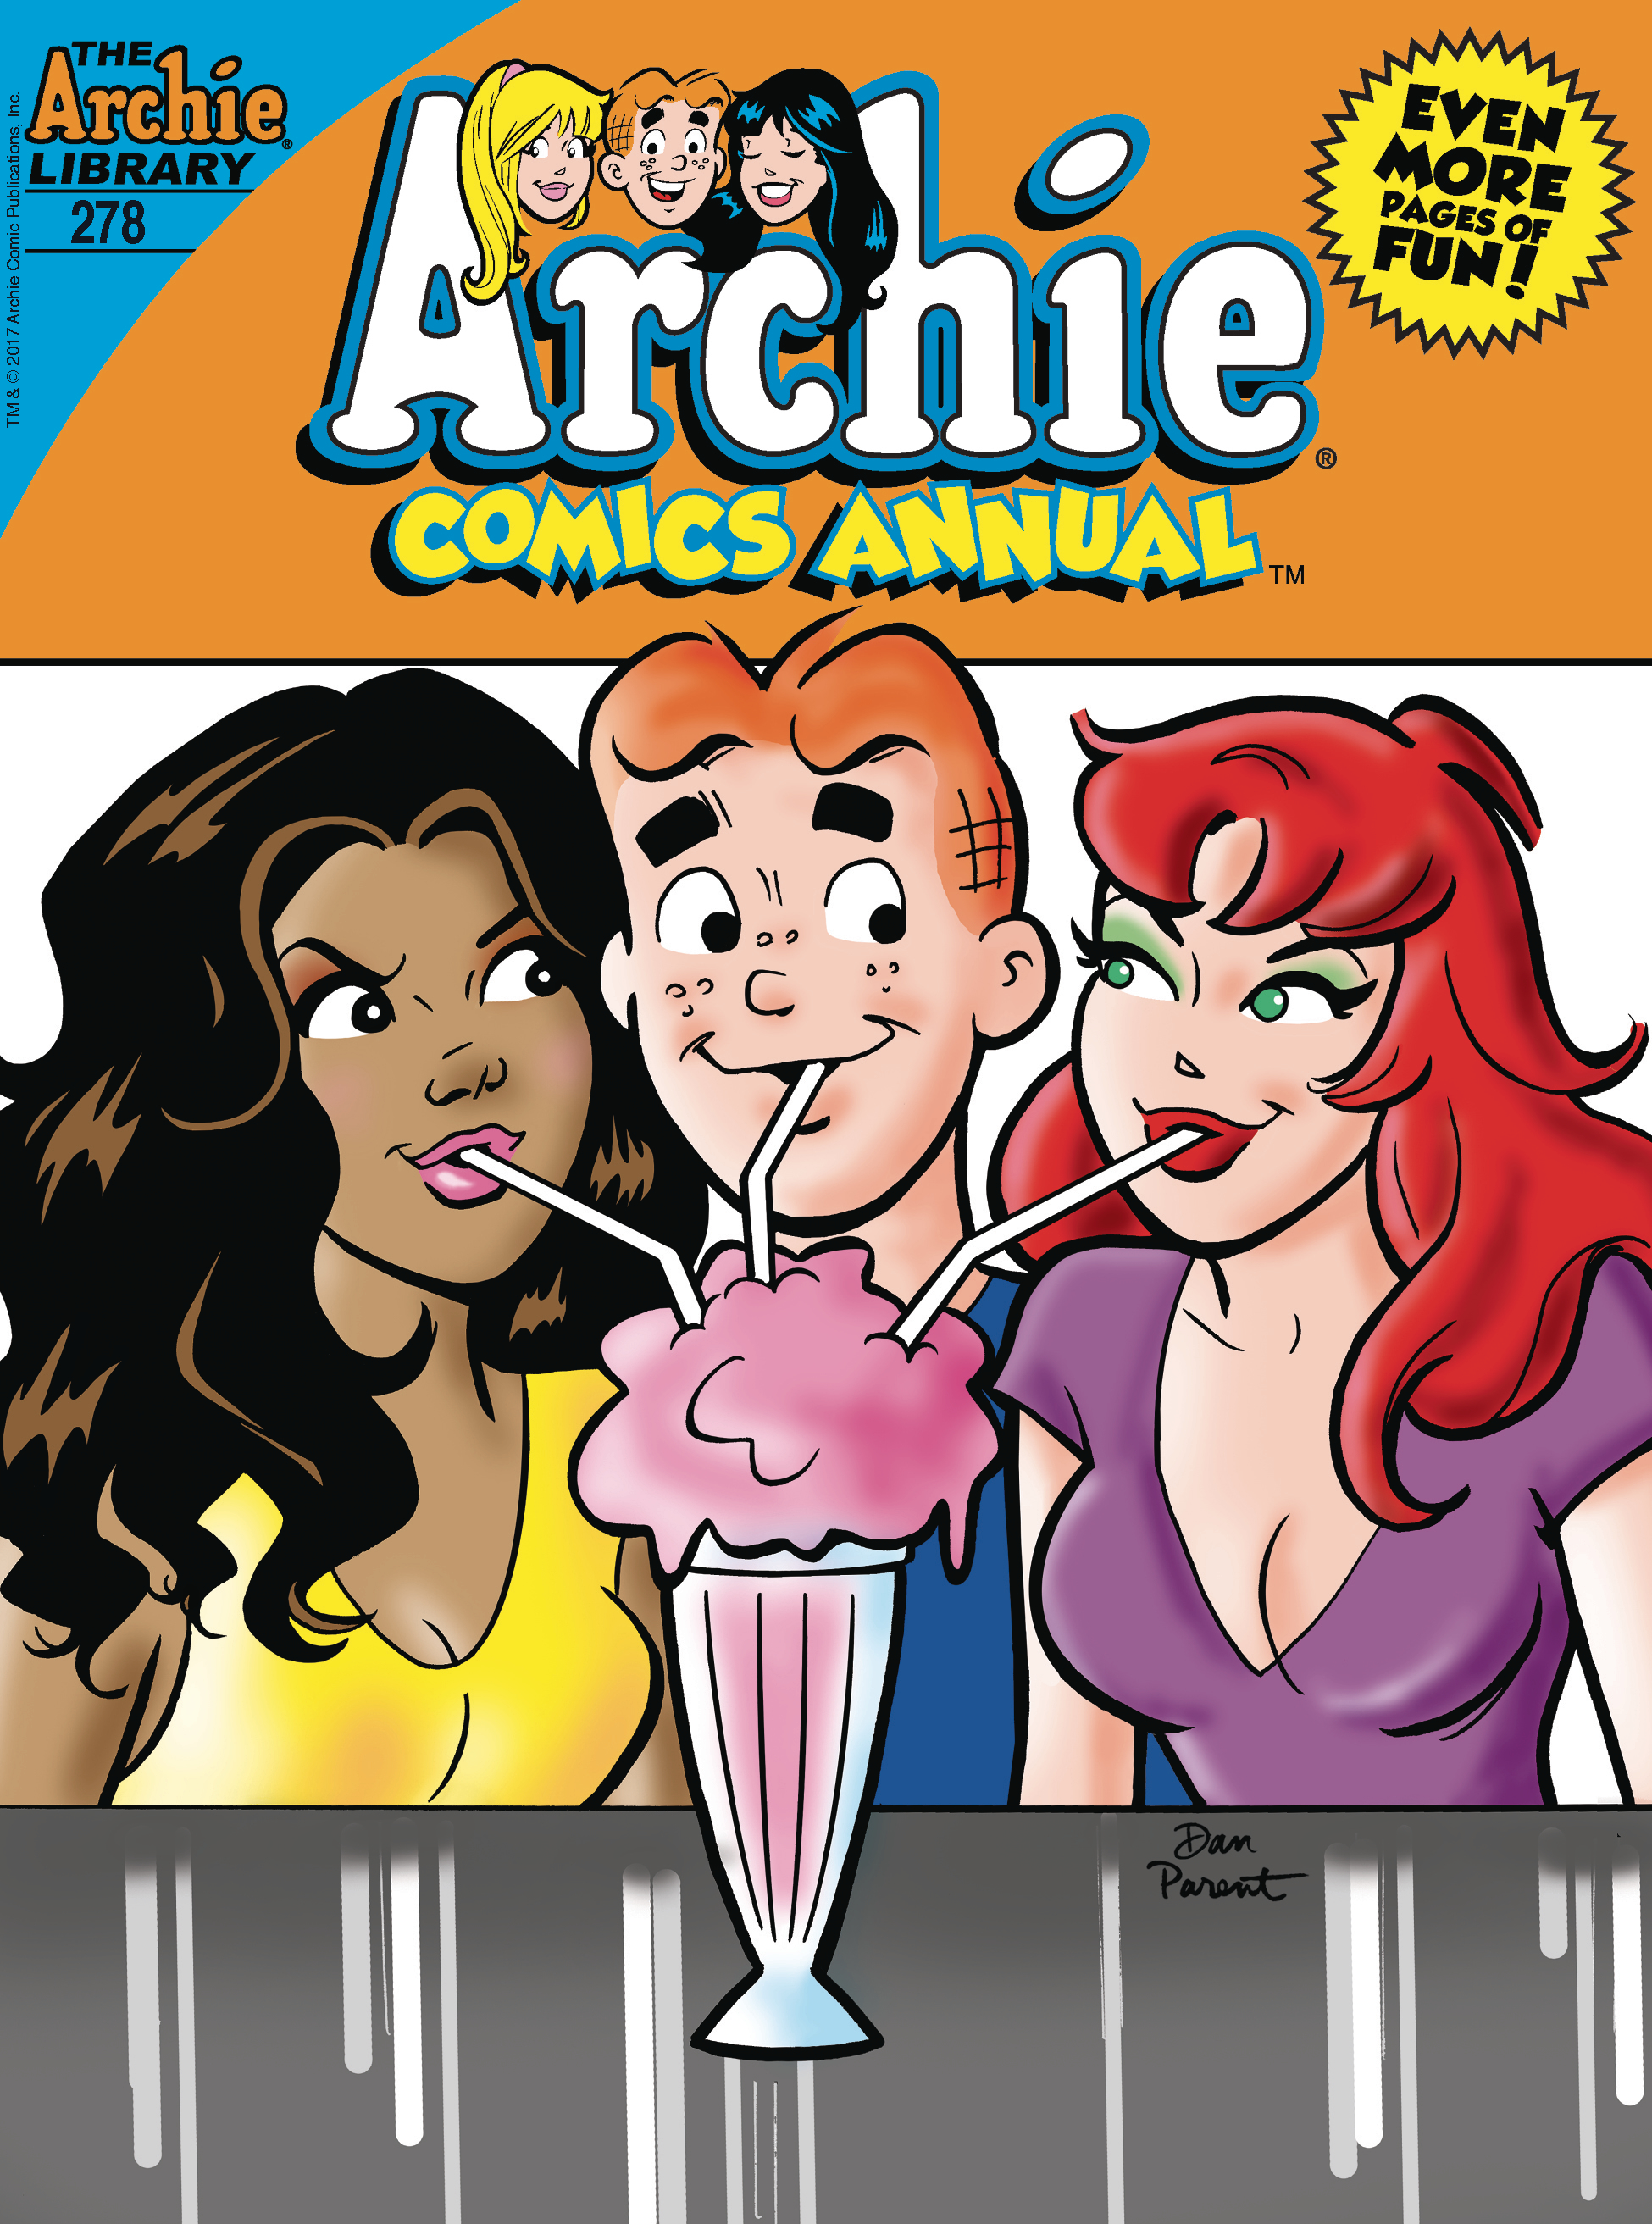 ARCHIE COMICS ANNUAL DIGEST #278